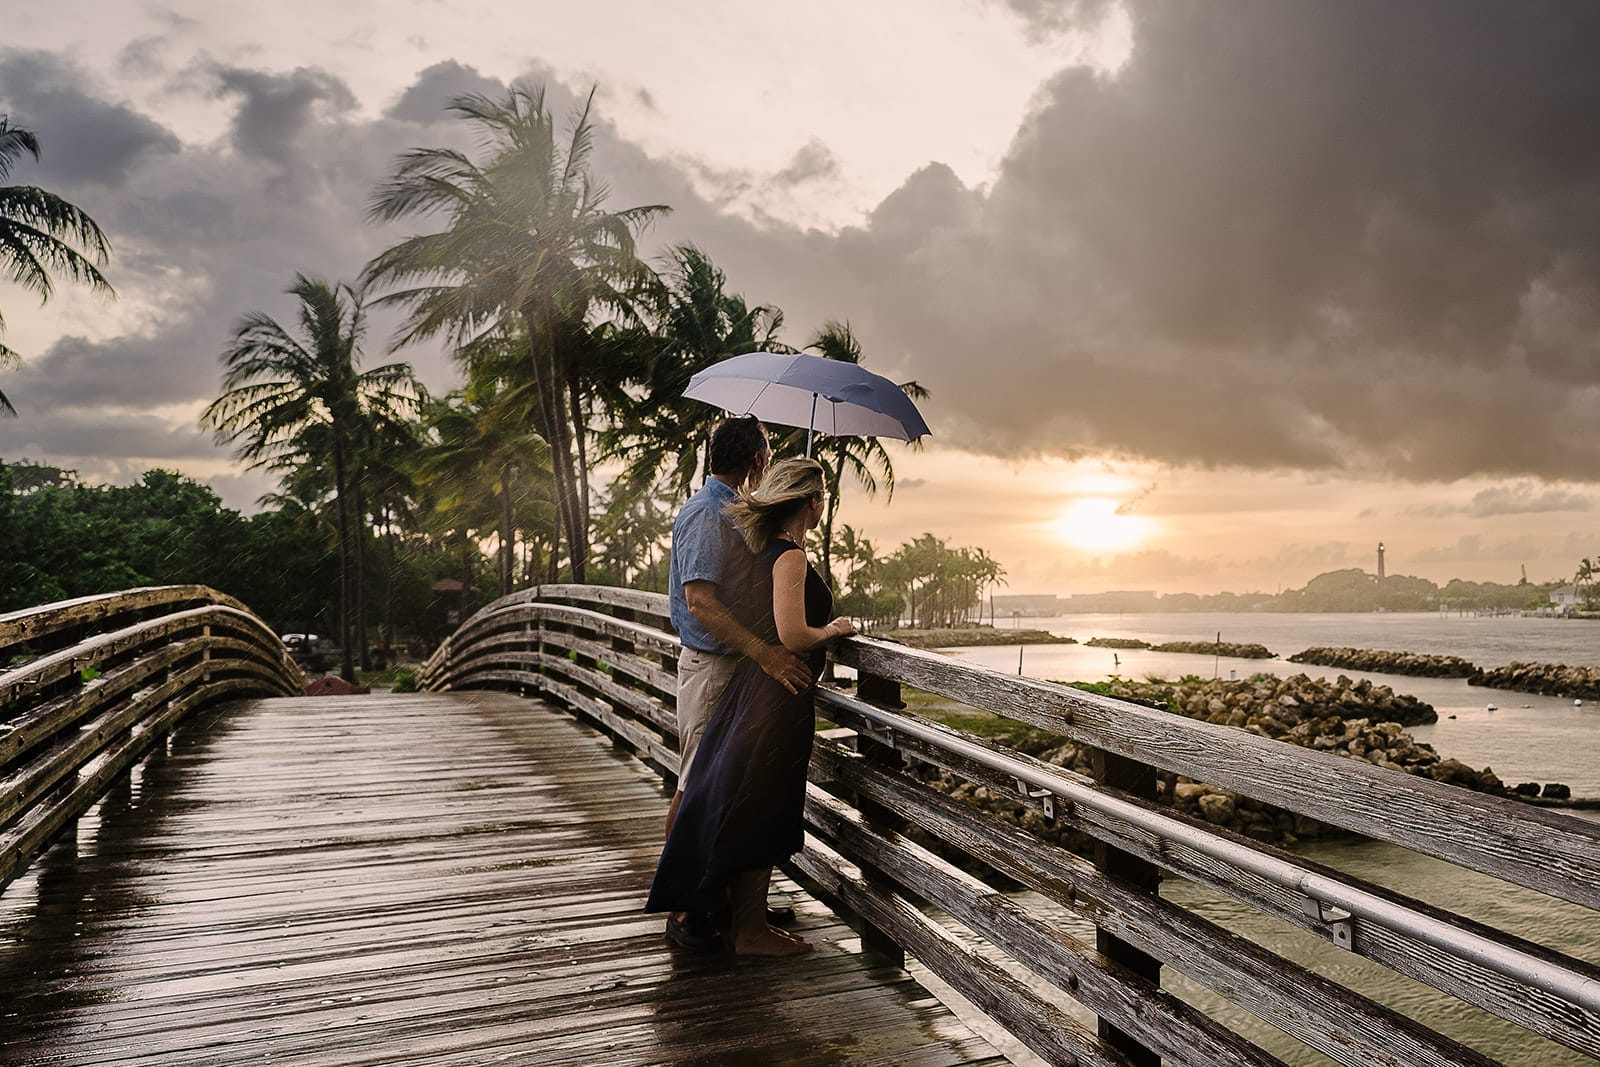 A couple enjoys their destination honeymoon in Bora Bora while watching the sunset.